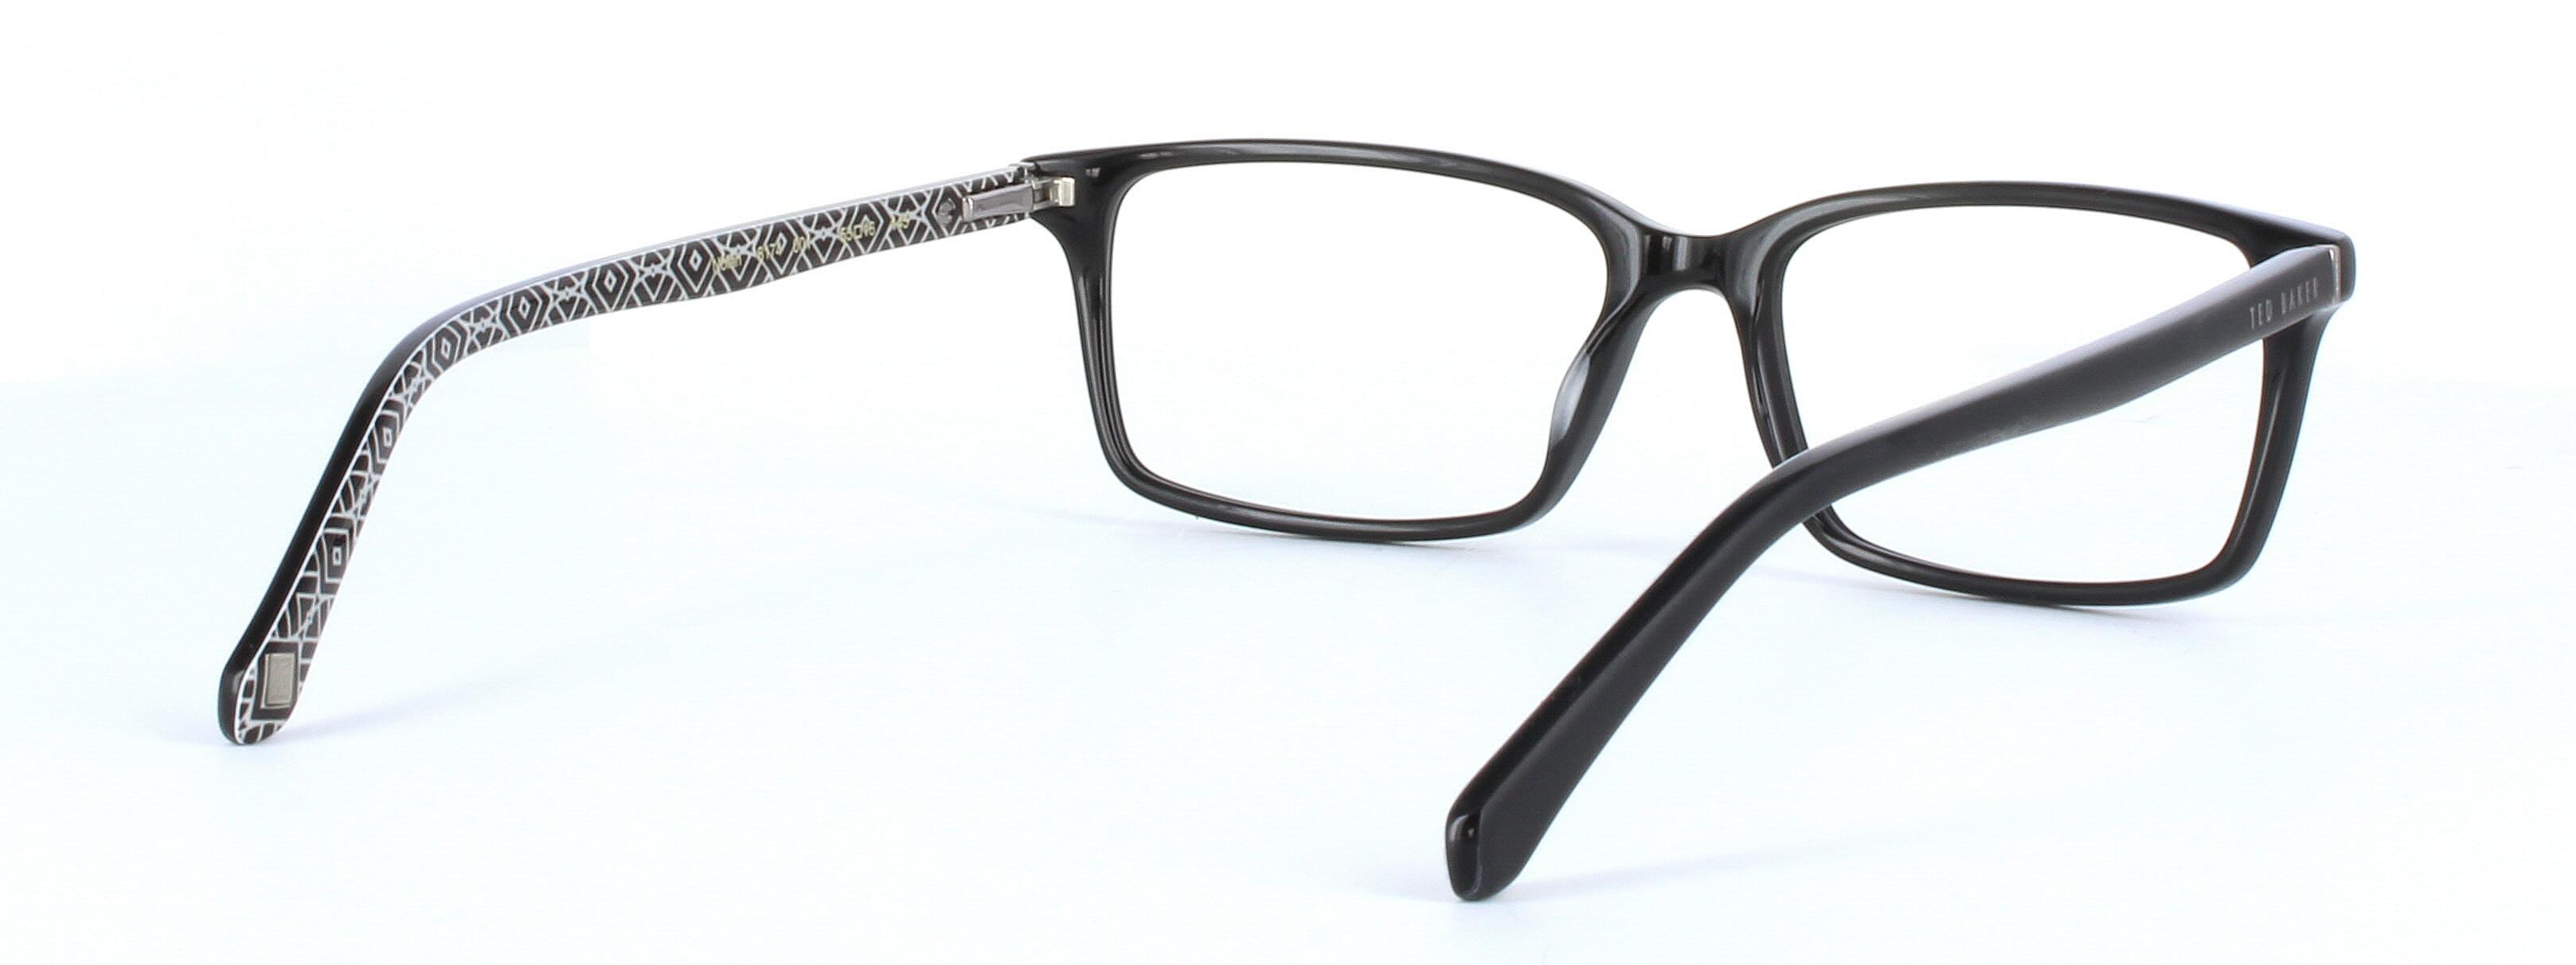 Ted Baker Nolan in black - unisex acetate designer glasses by Police - image view 4